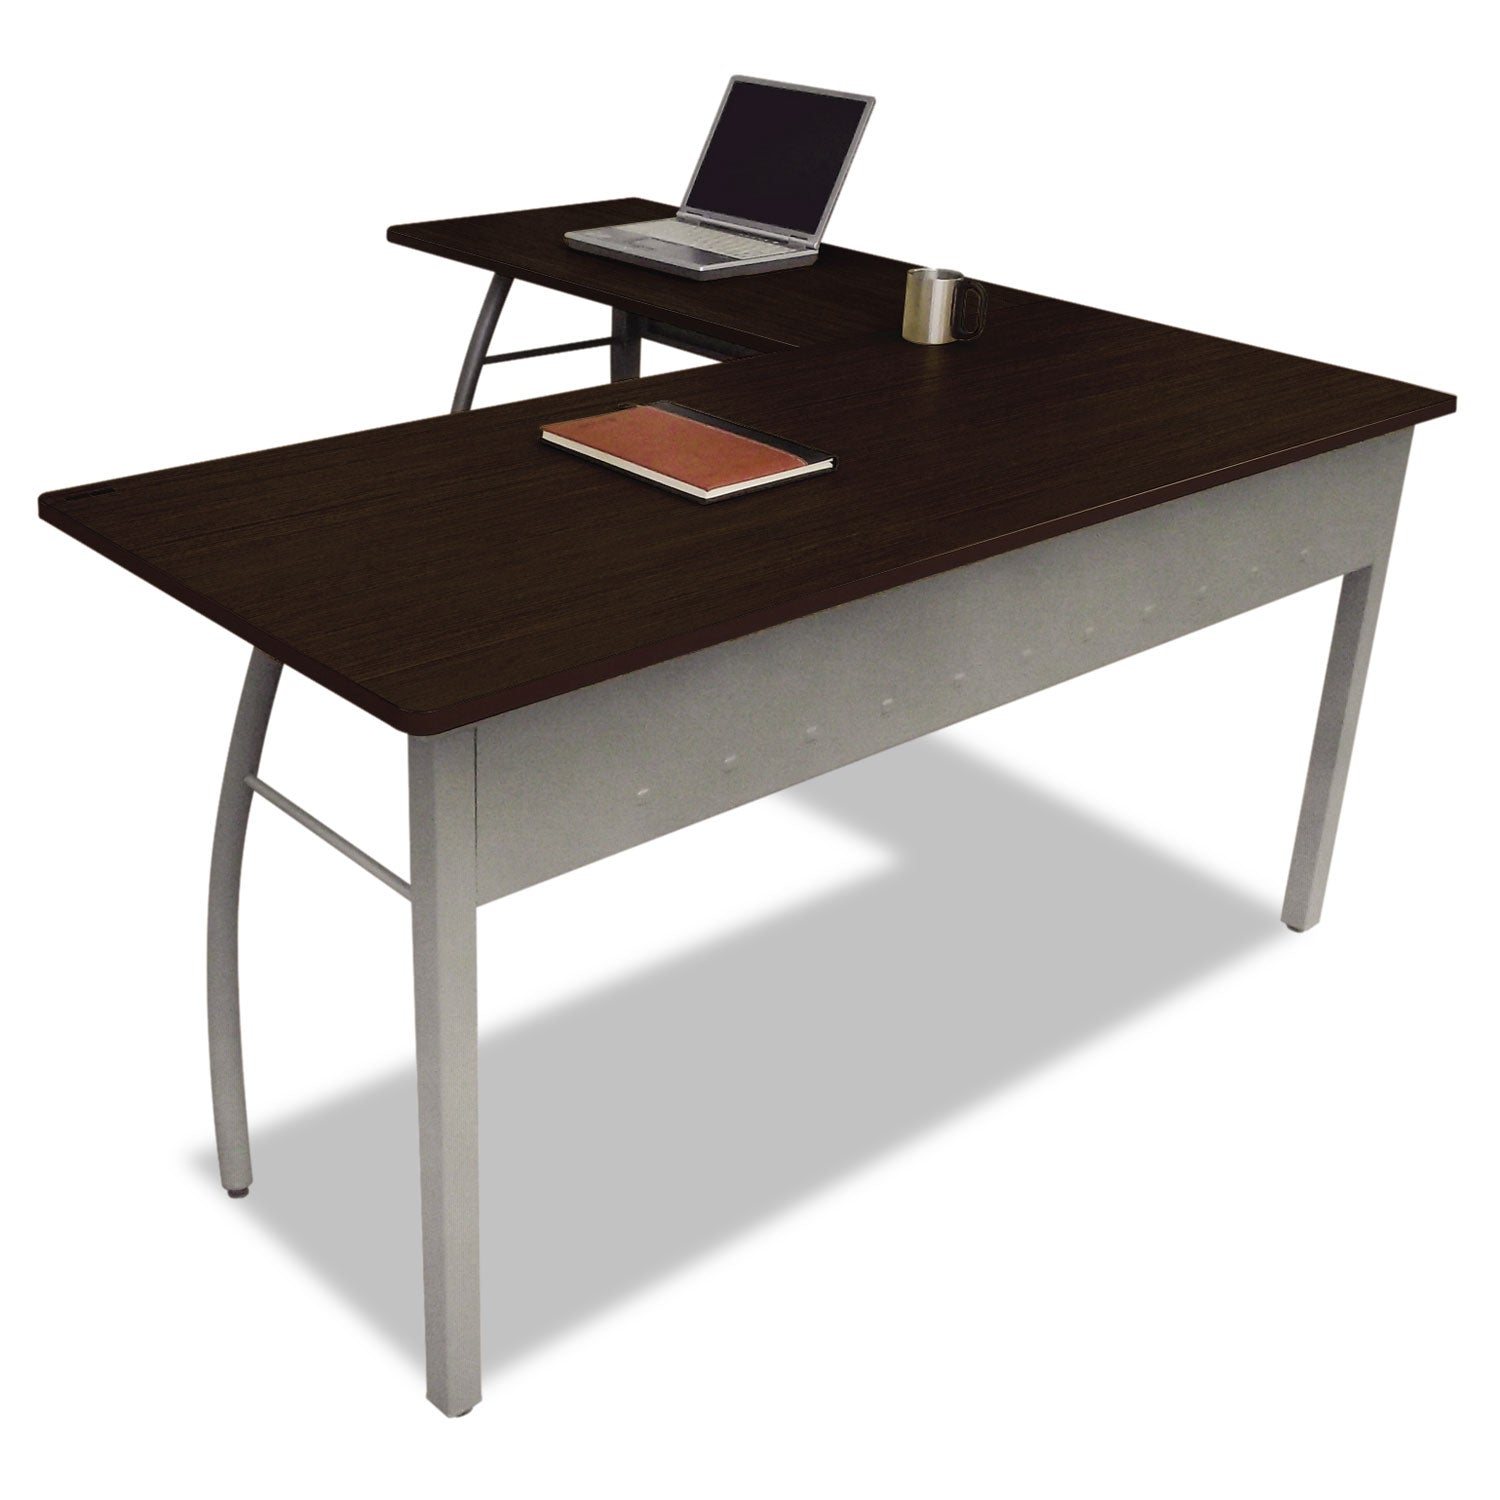 Trento Line L-Shaped Desk, 59.13" x 59.13" x 29.5", Mocha/Gray - 